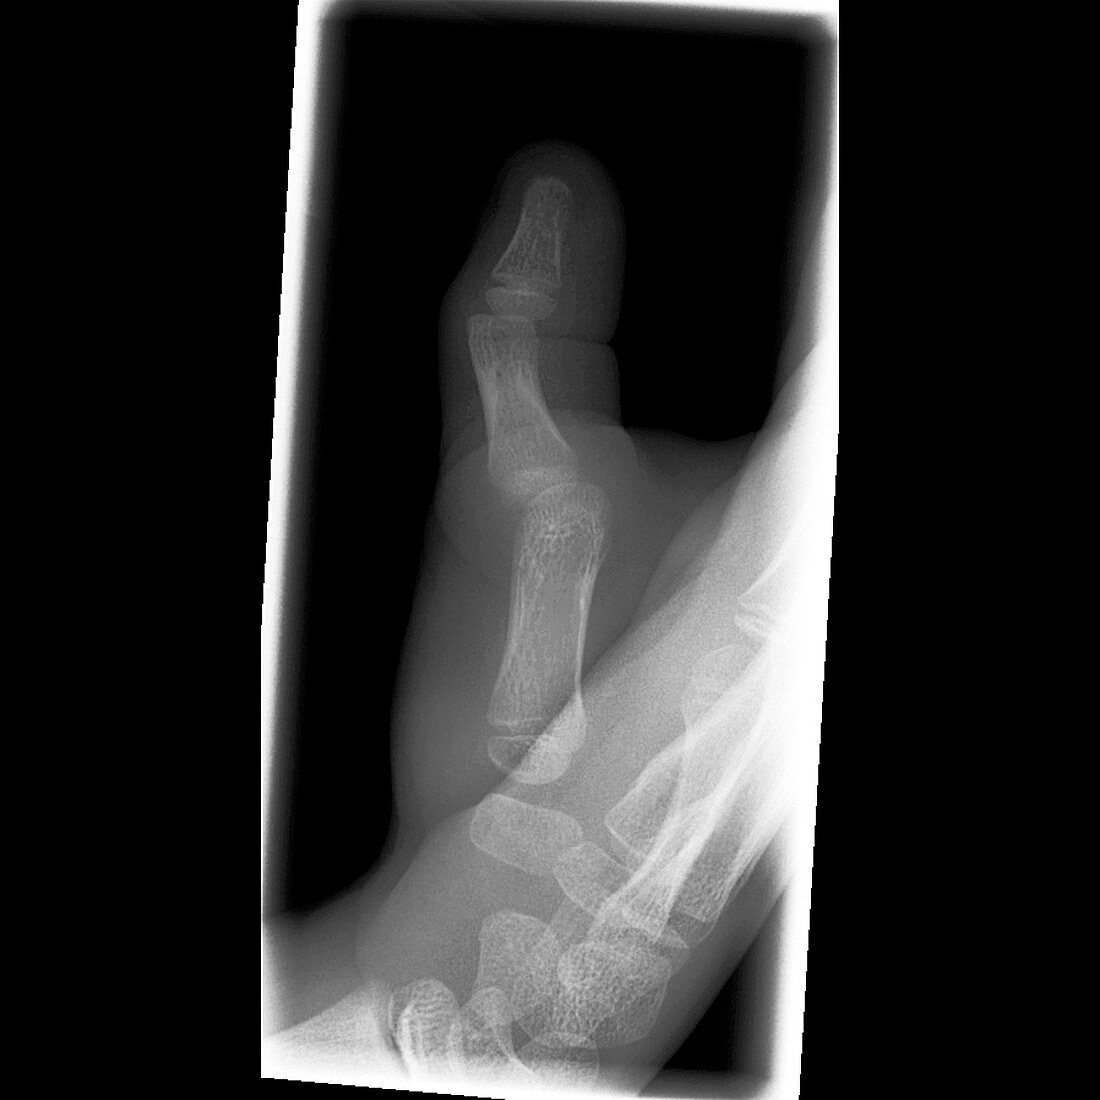 Dislocated thumb,X-ray